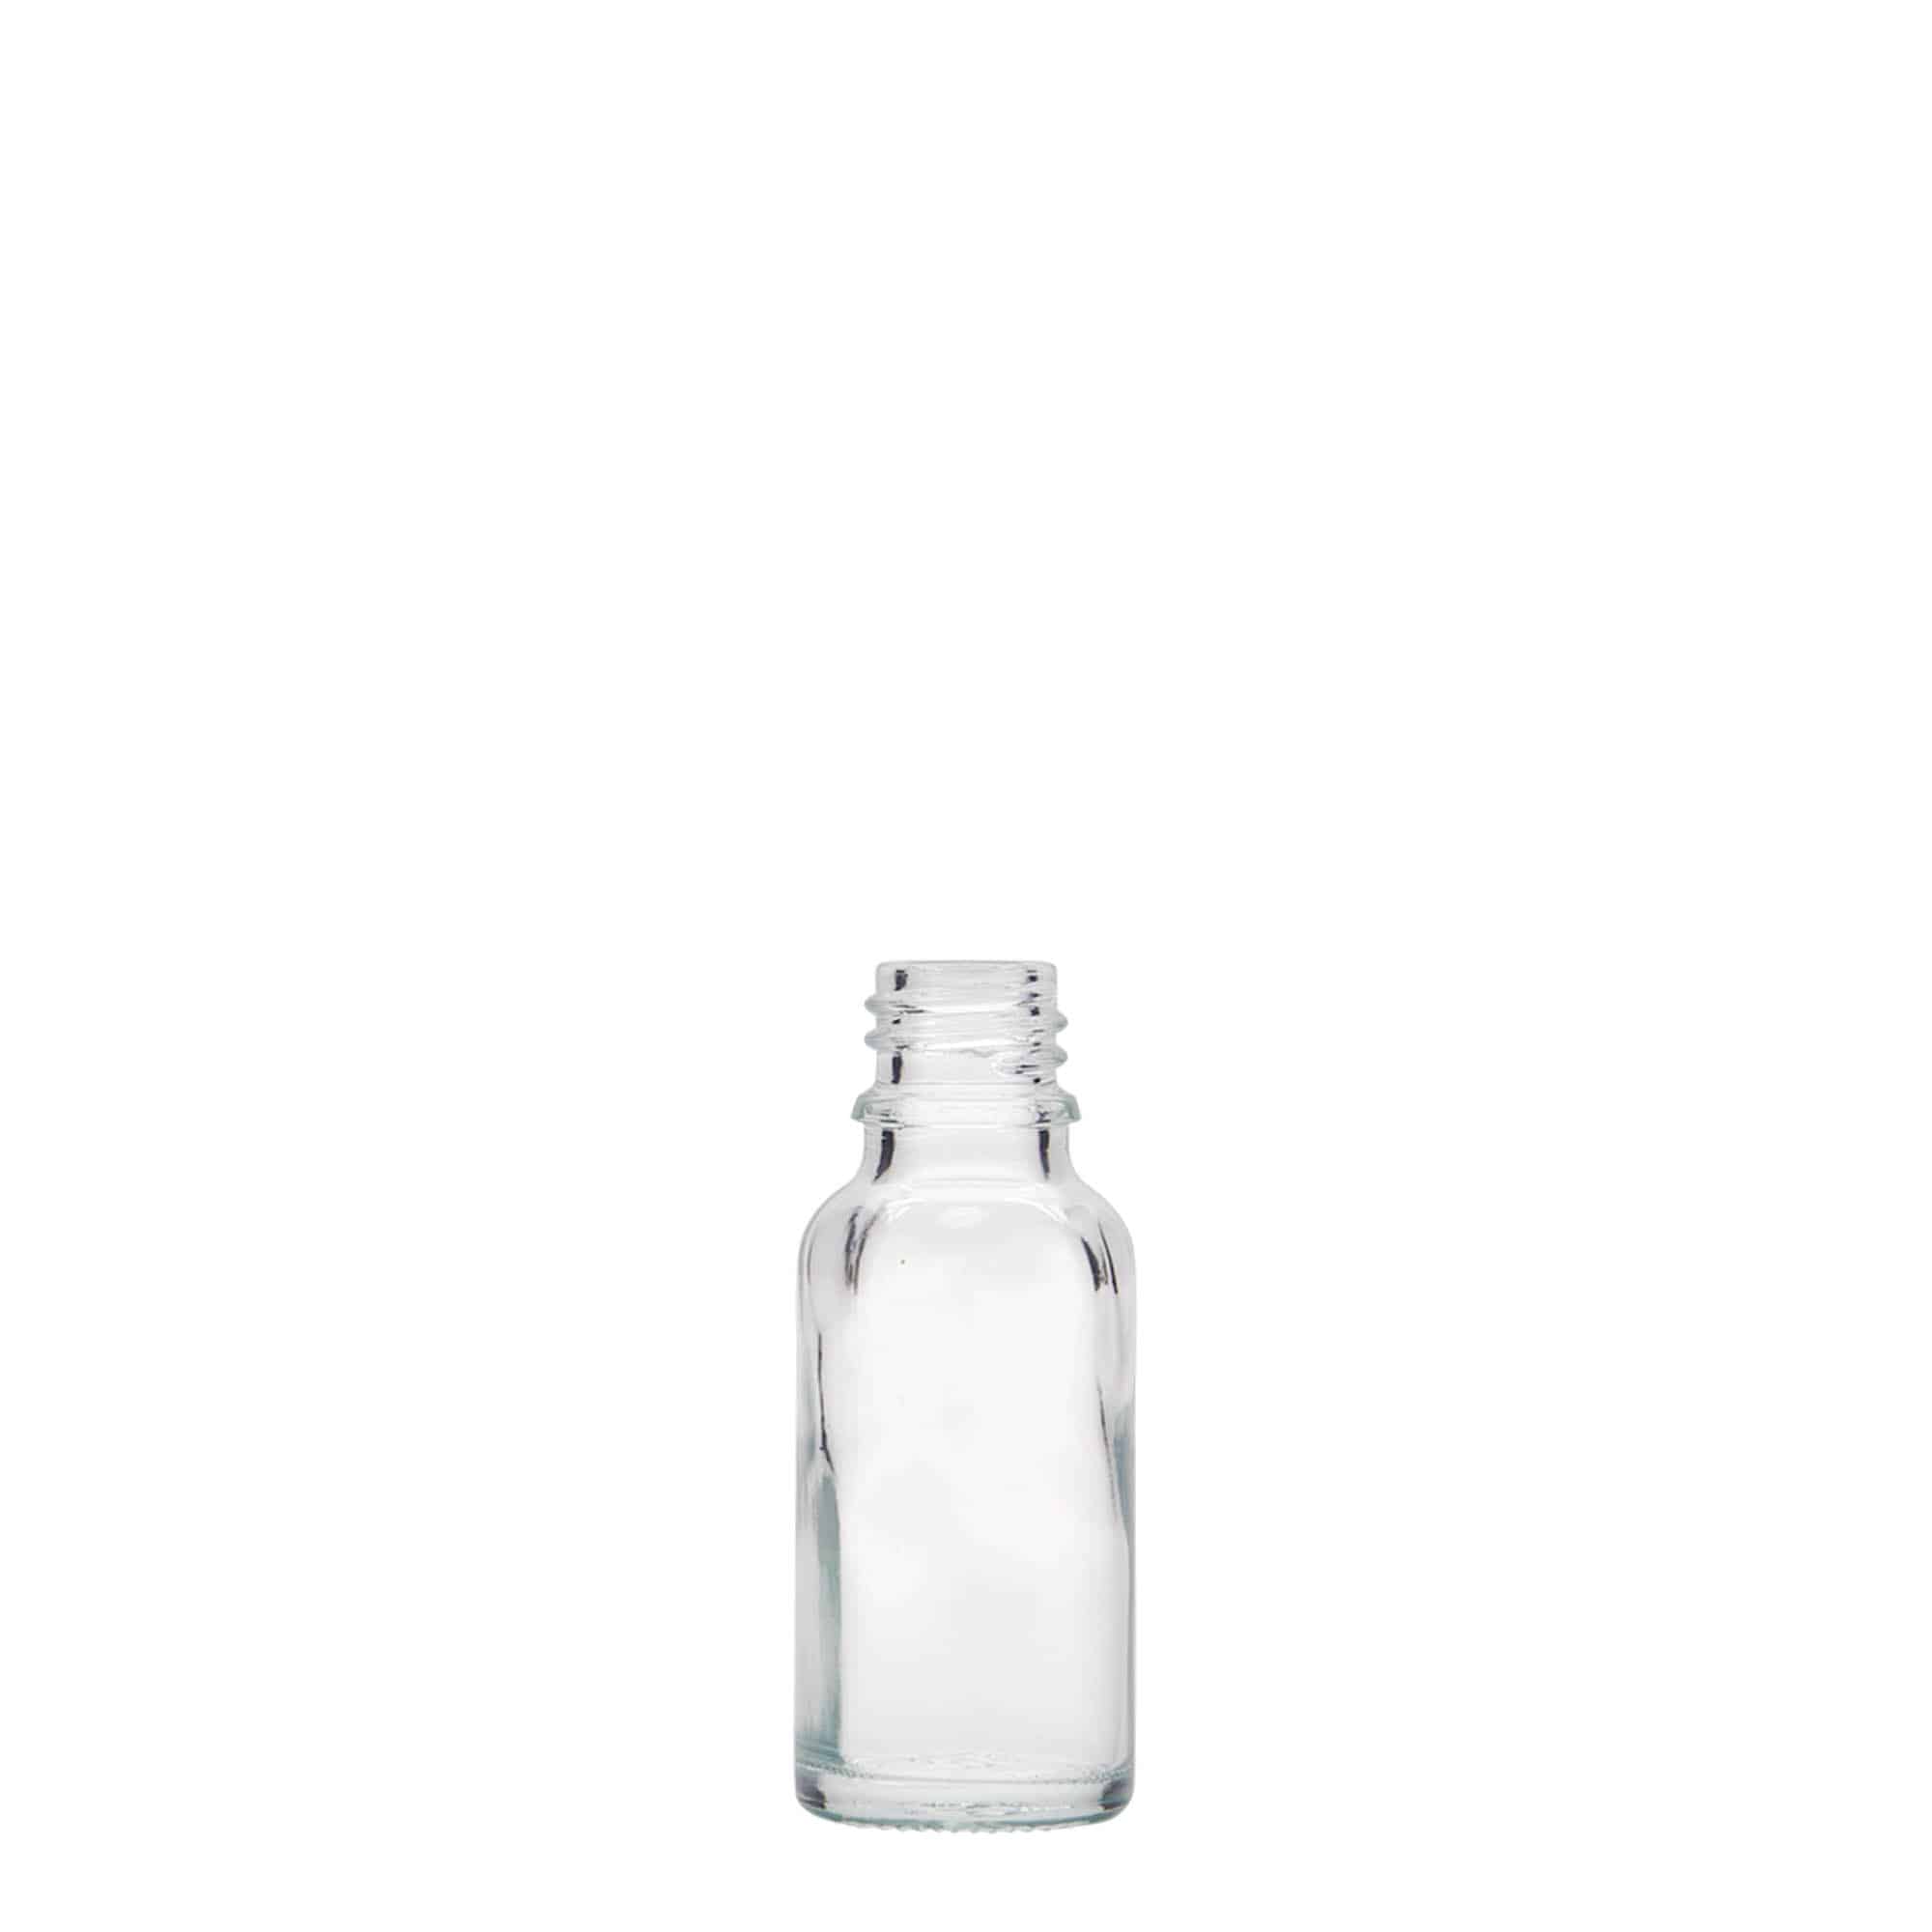 20 ml medicine bottle, glass, closure: DIN 18